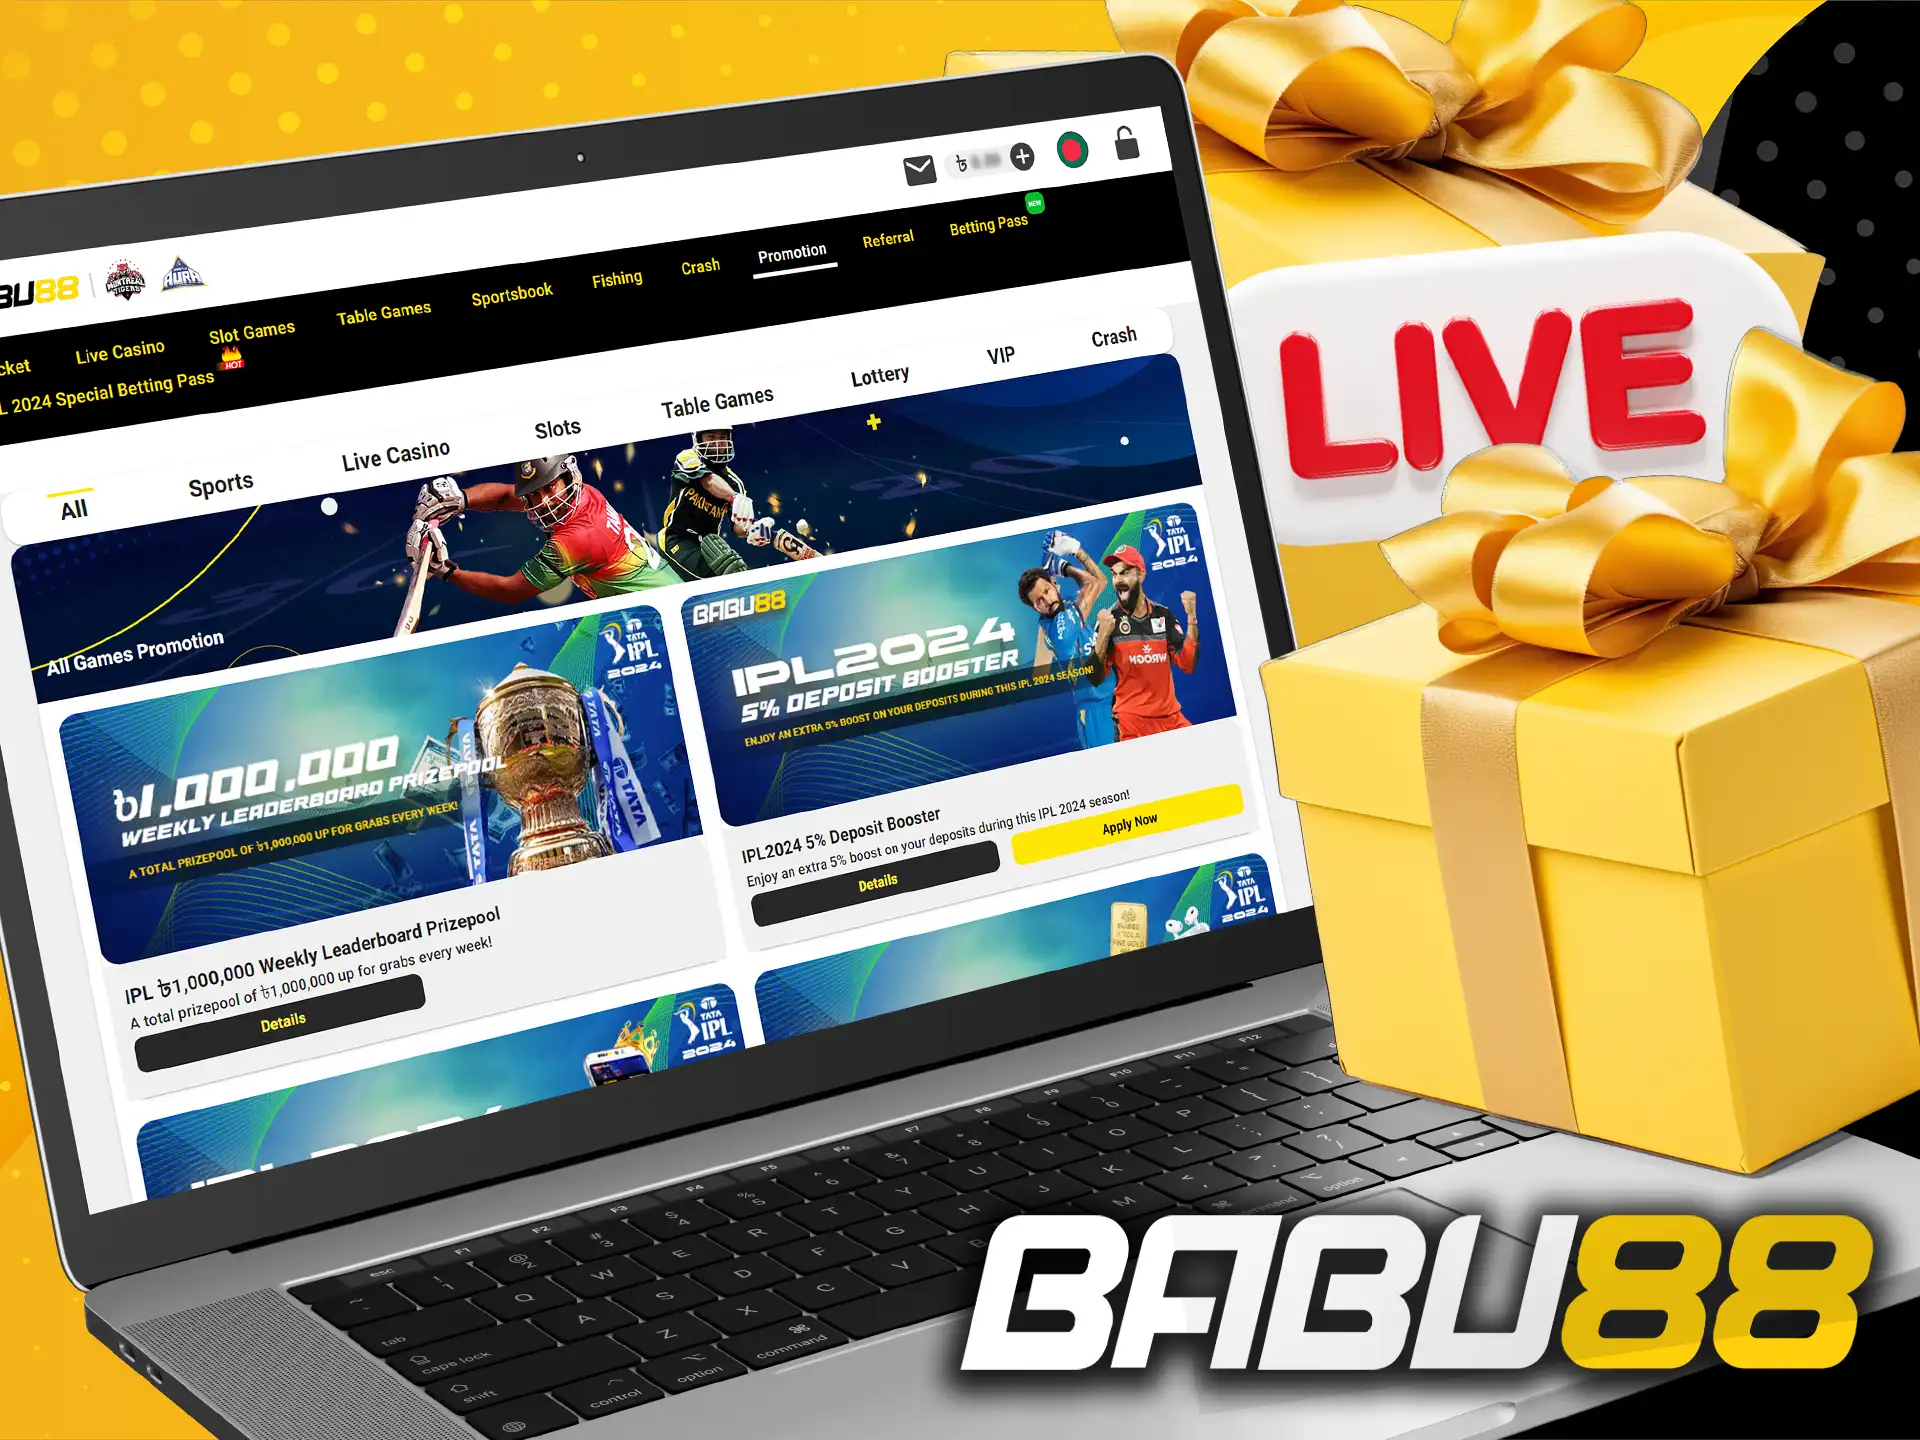 Babu88 offers great bonuses for IPL live betting.